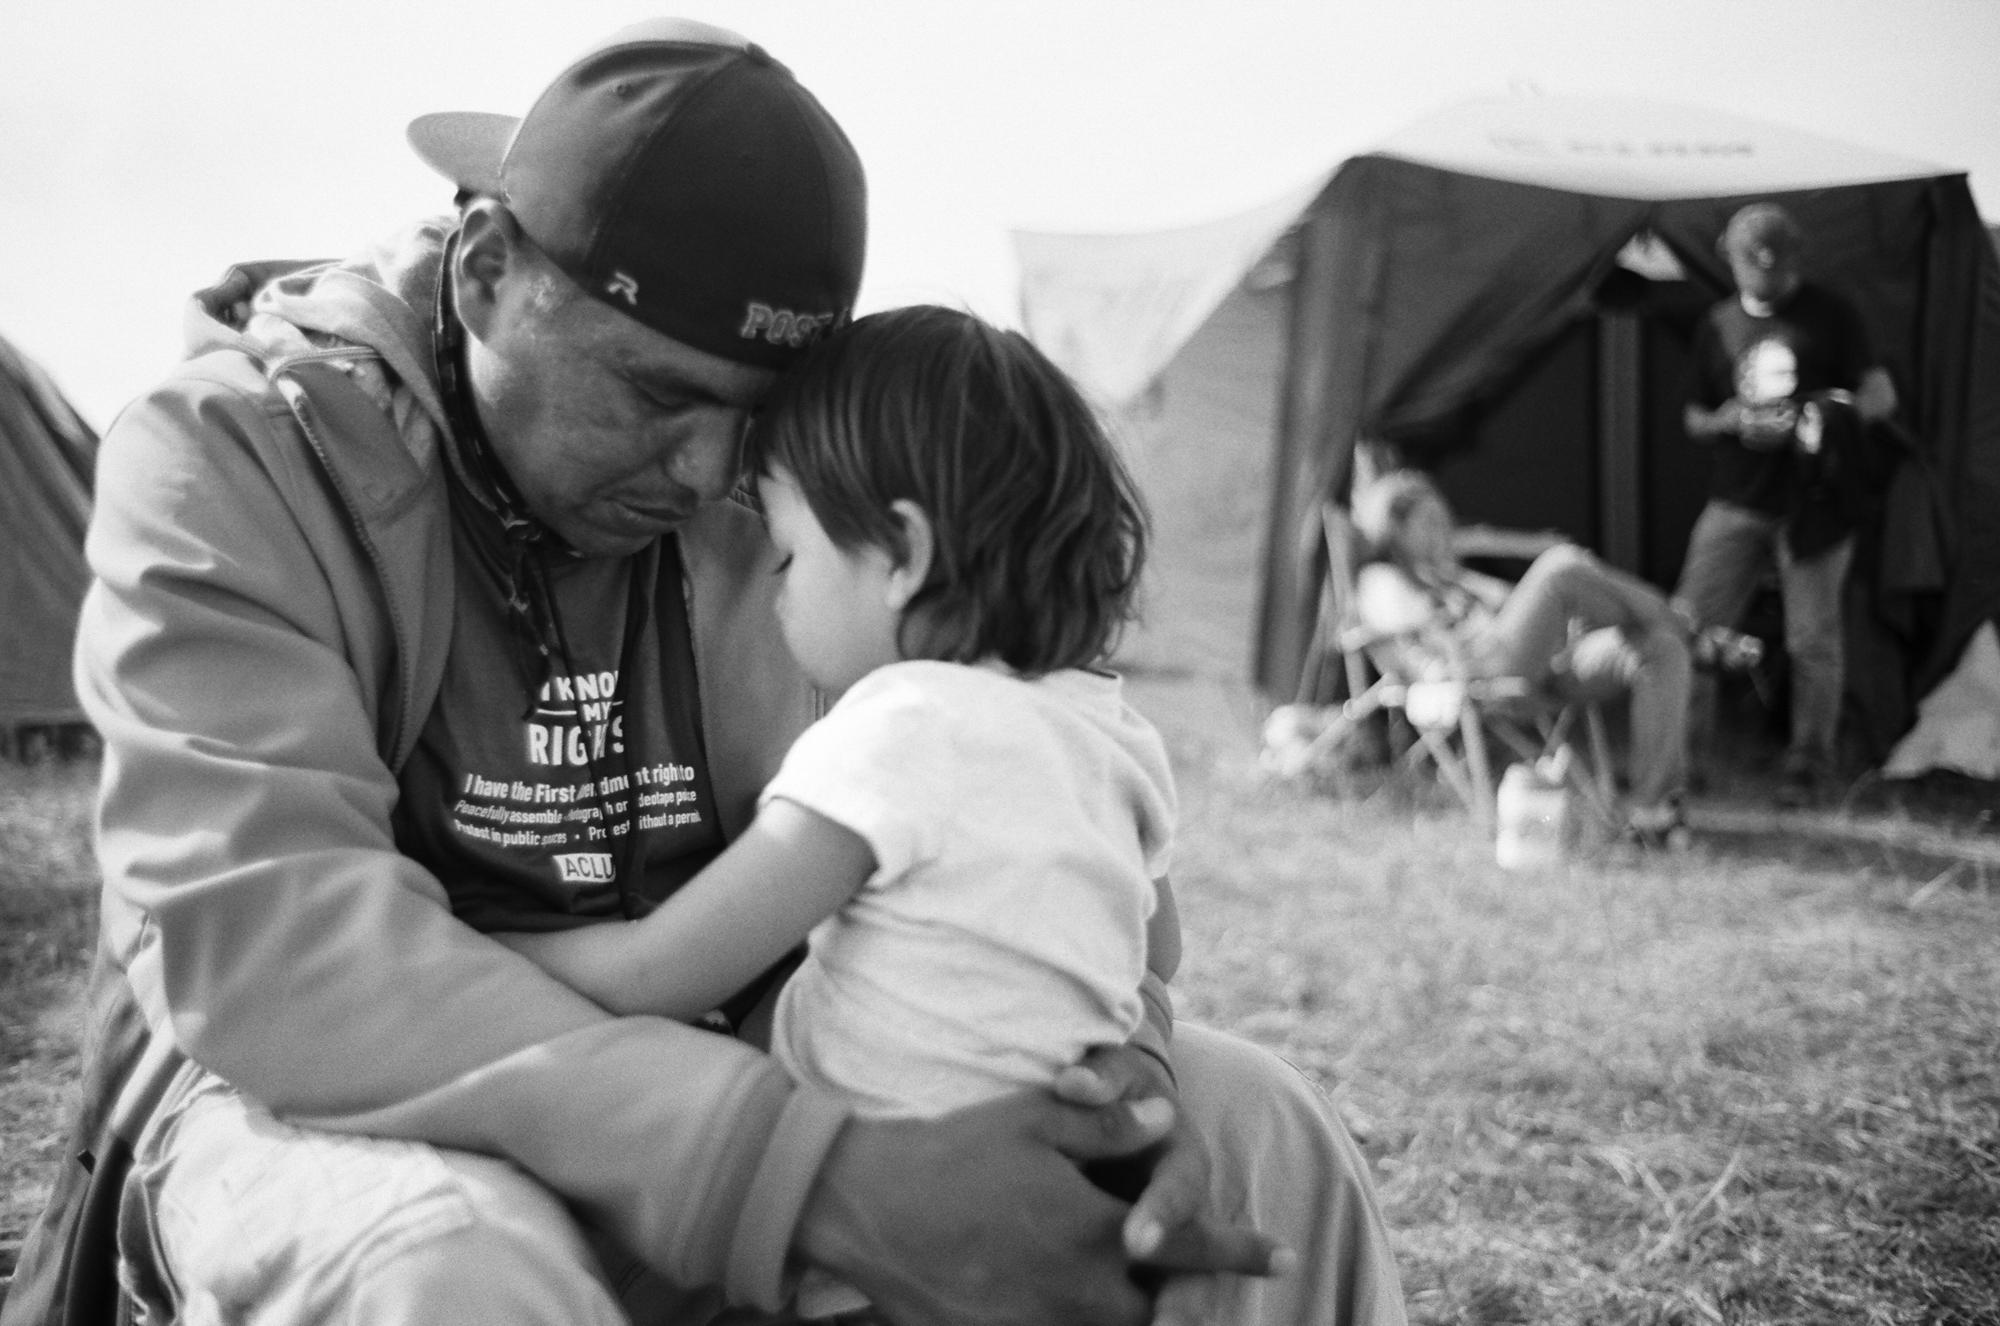 Standing Rock - Dean Dedman Jr. with his daughter, up on "Media...